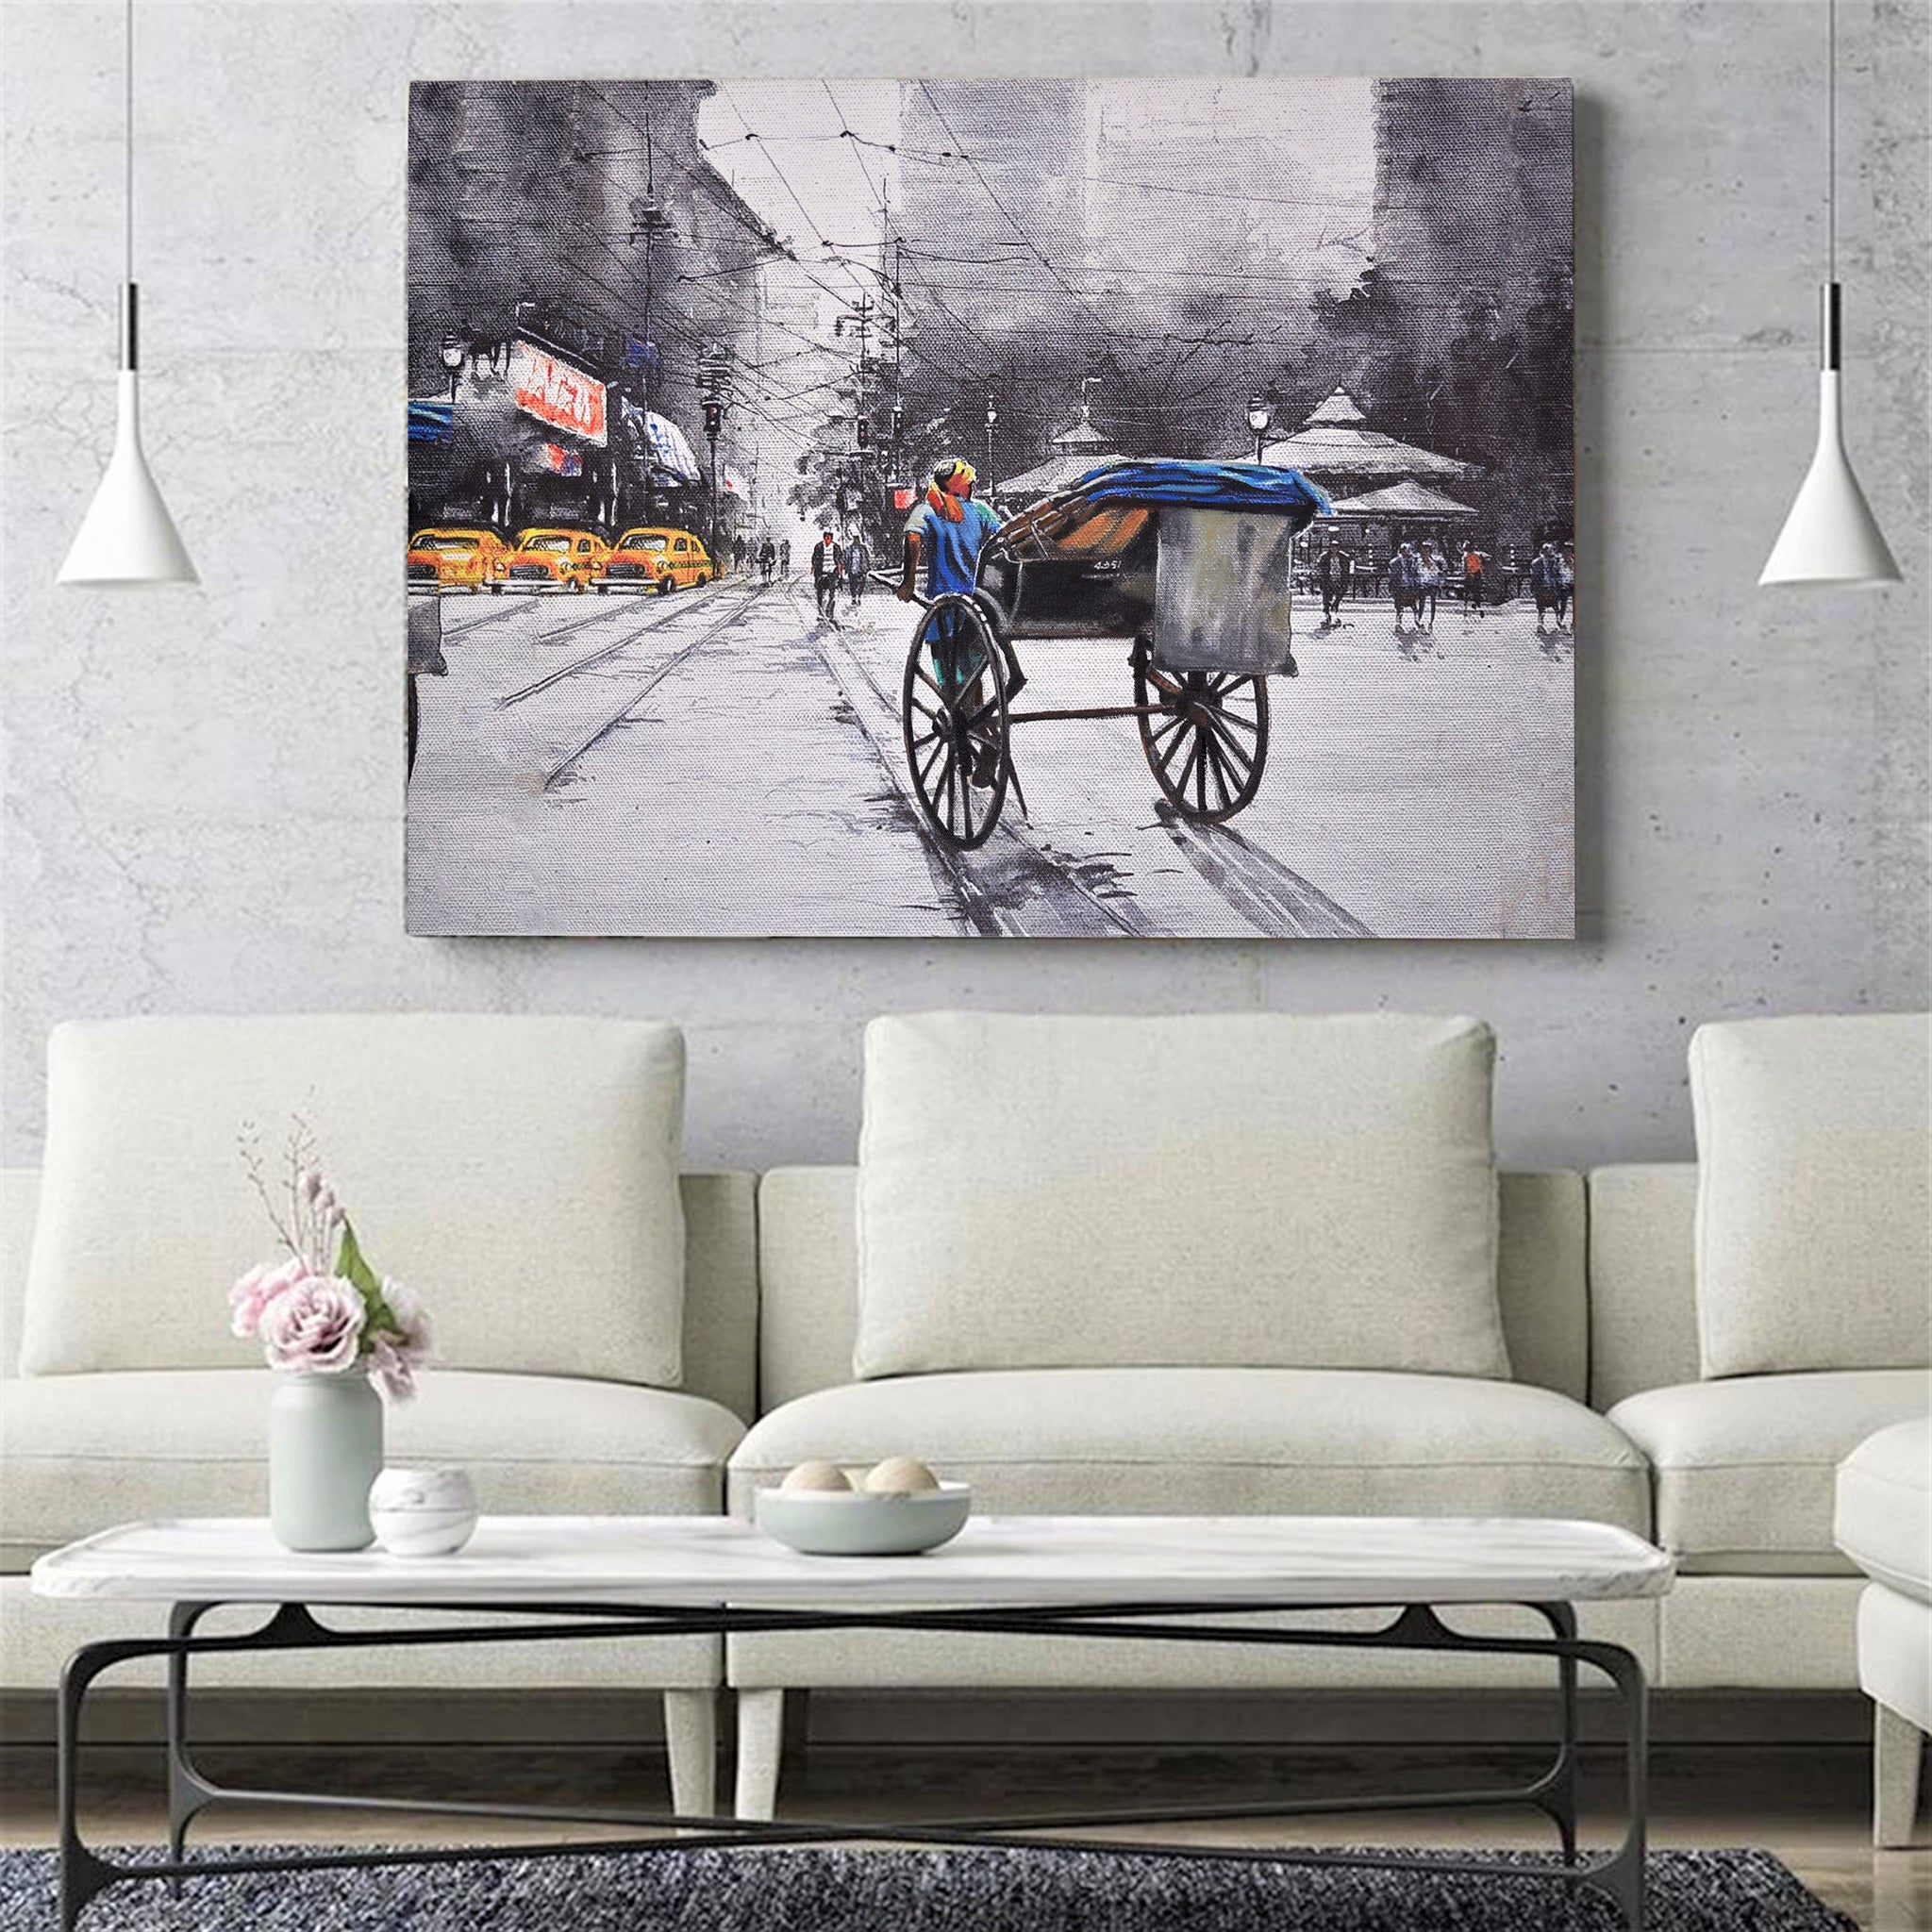 Printed Wall Art on Canvas - Rickshaw